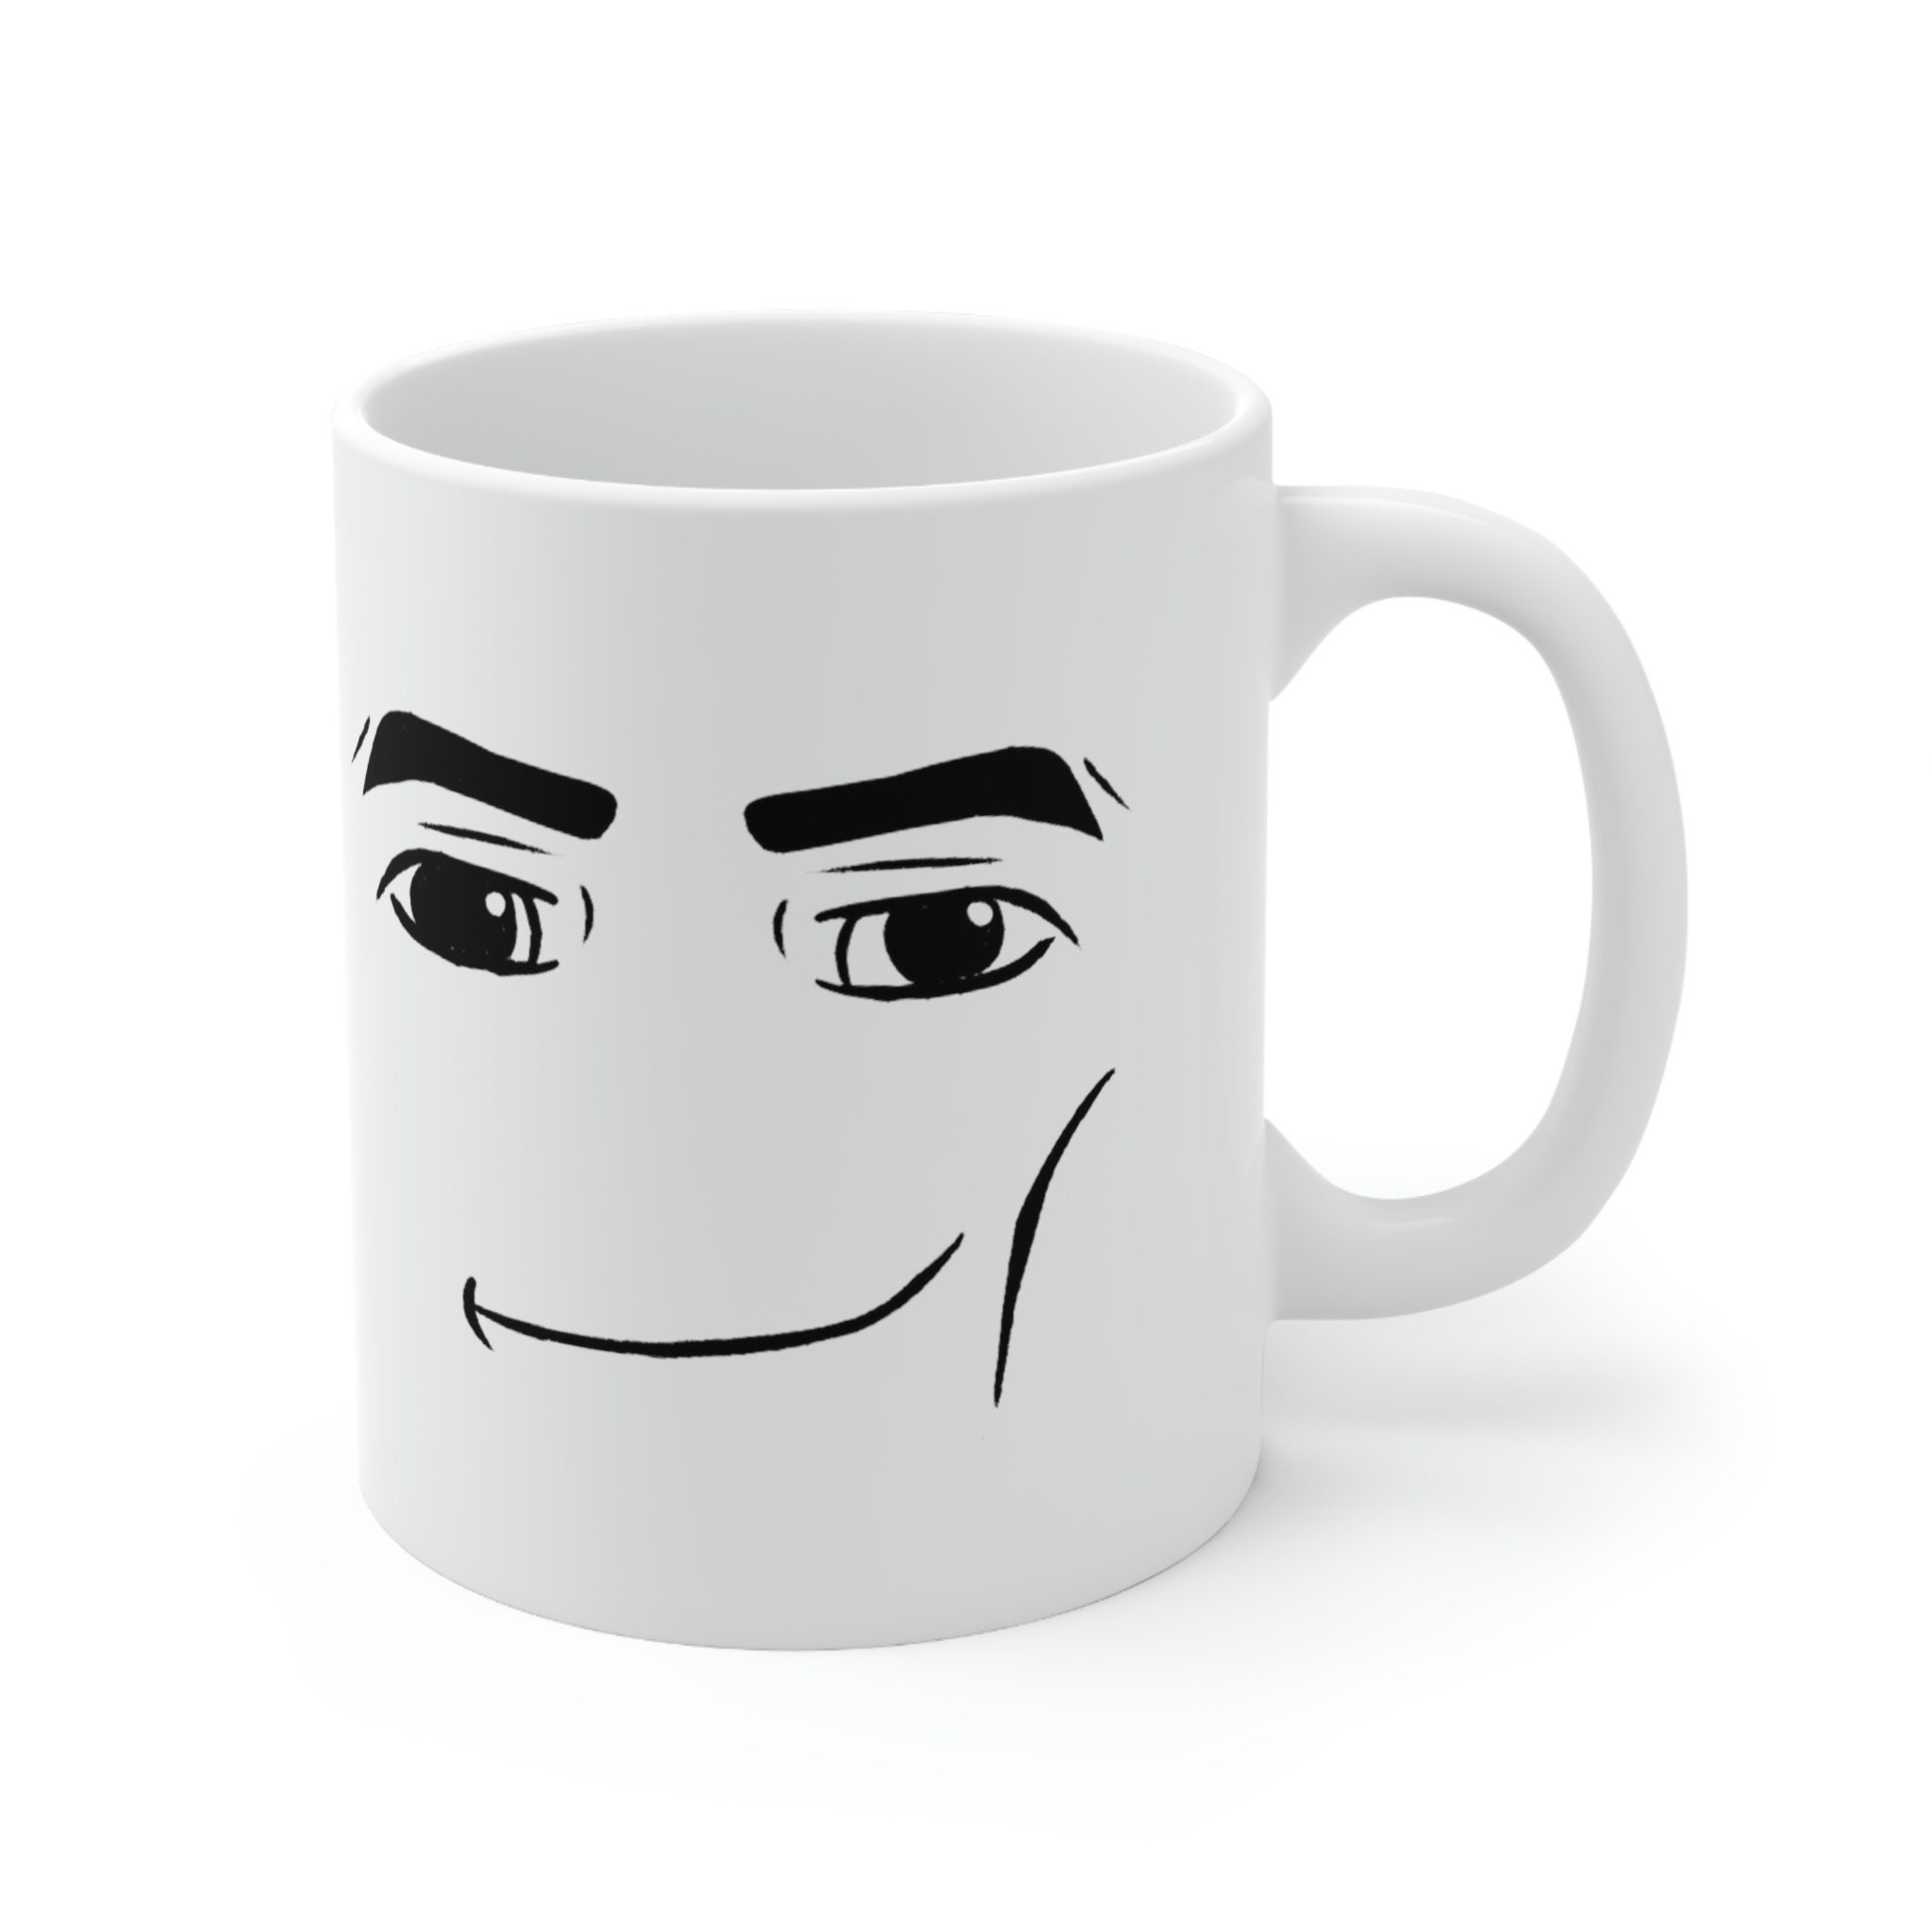 Funny Roblox man face Coffee Mug by Yassinesaadi